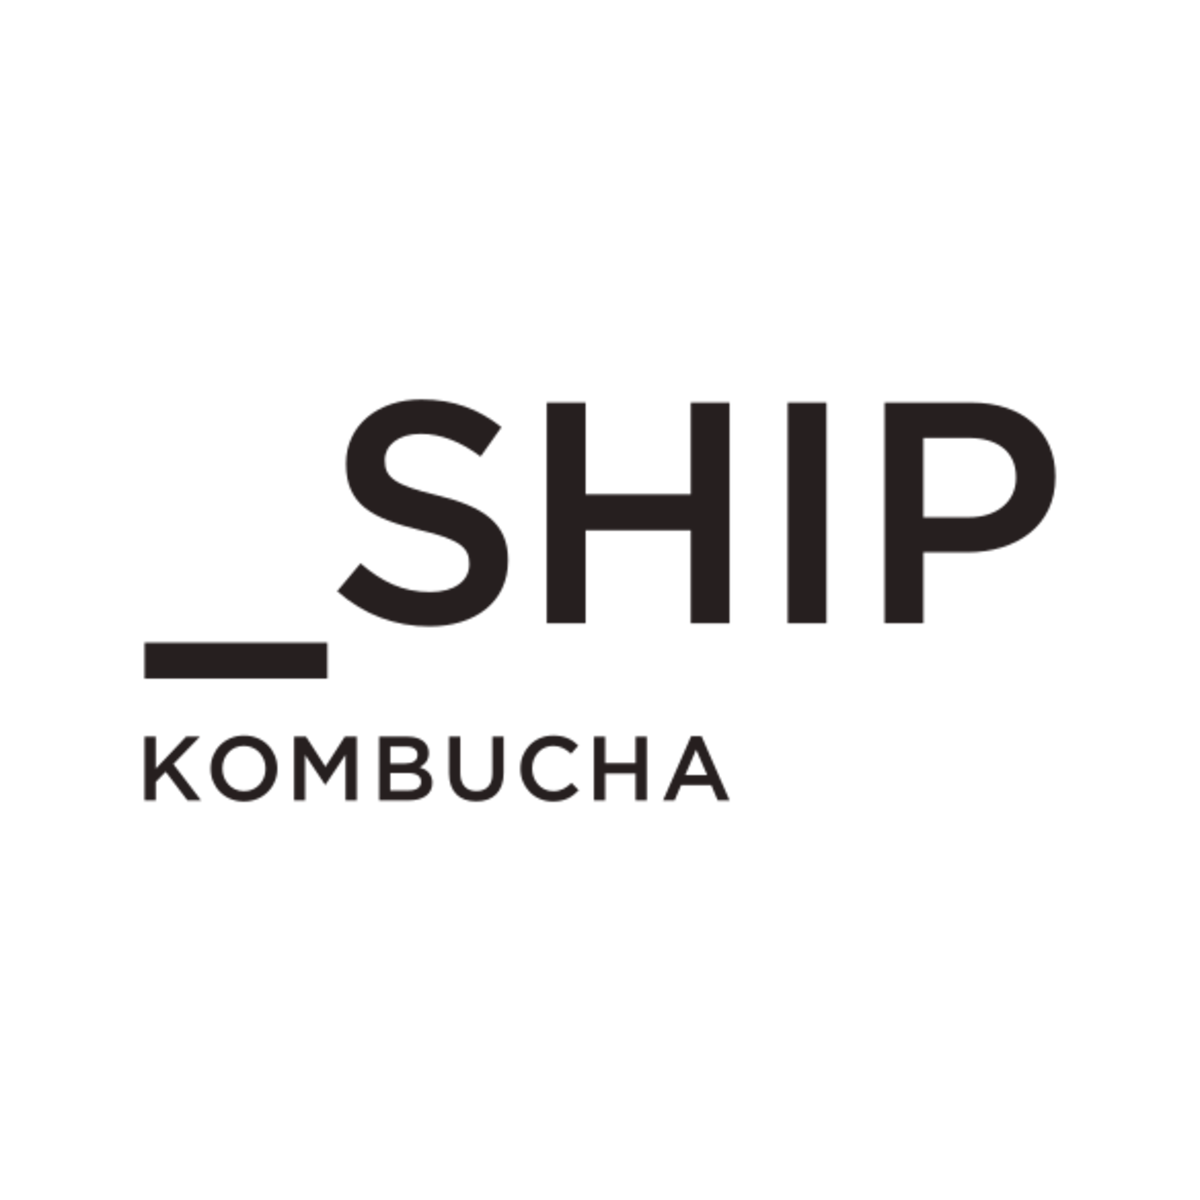 KOMBUCHA_SHIP